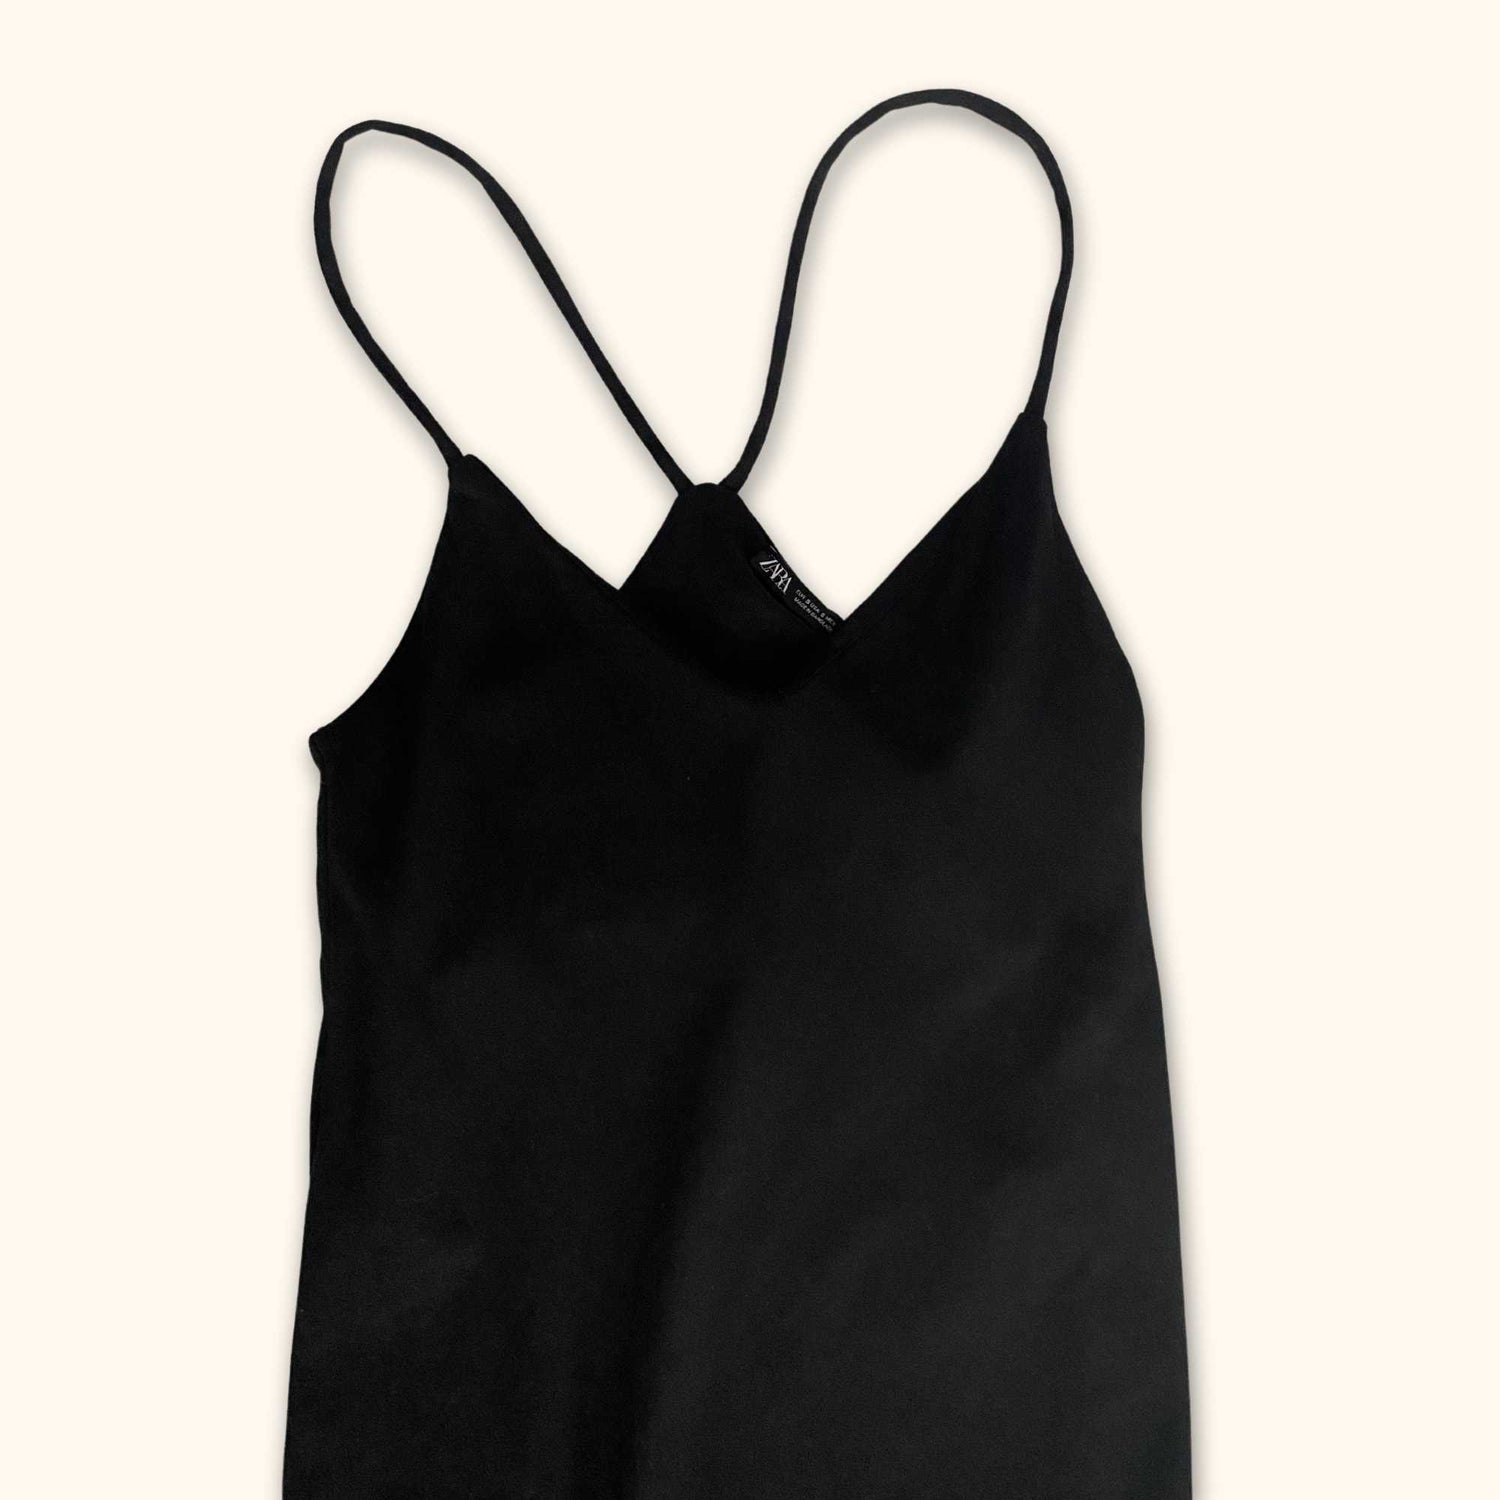 Zara Black Midi Cami Dress - Size Small - Zara - Dresses